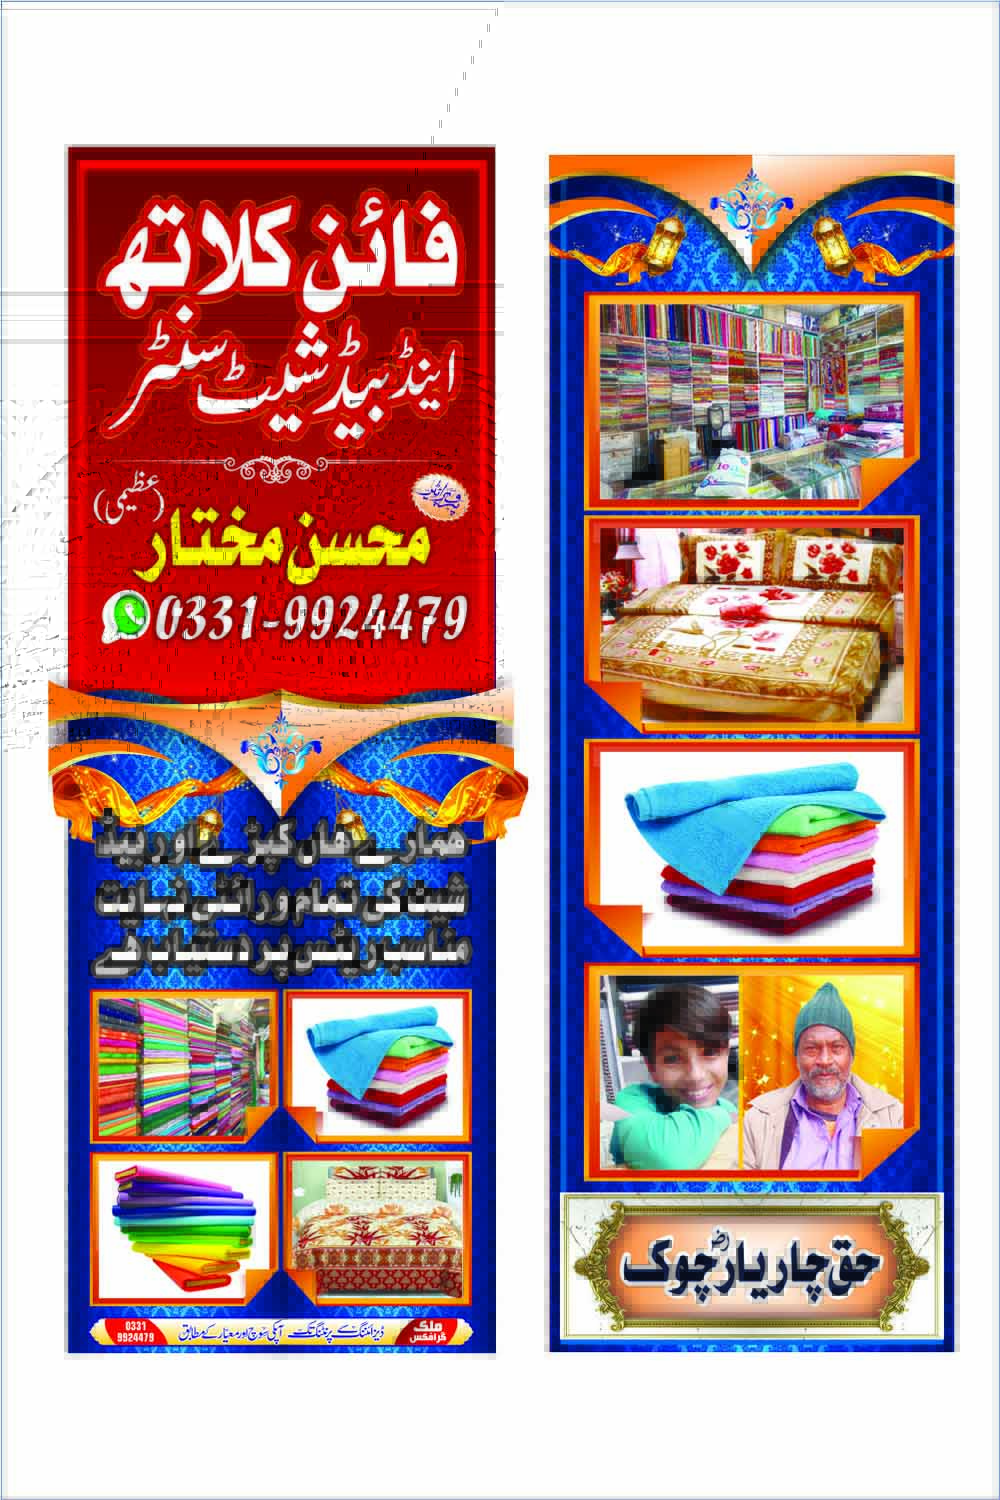 standee portrait graphic design Urdu sample pinterest preview image.